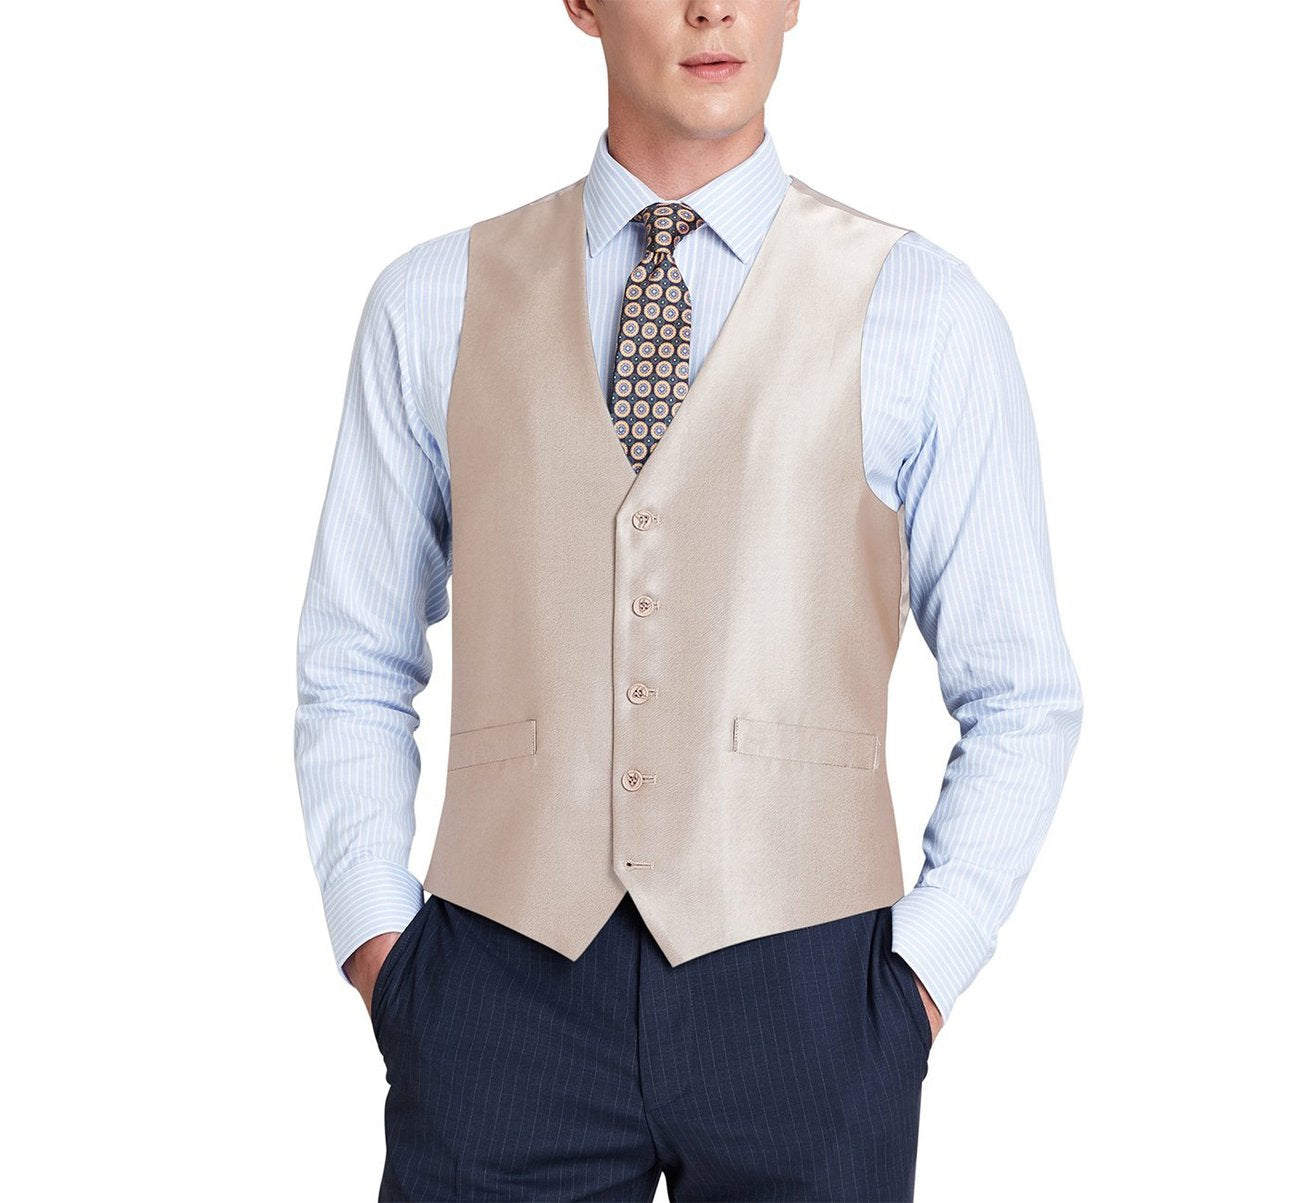 RENOIR Beige Formal Regular Fit Suit Vest Sharkskin Waistcoat 207-3